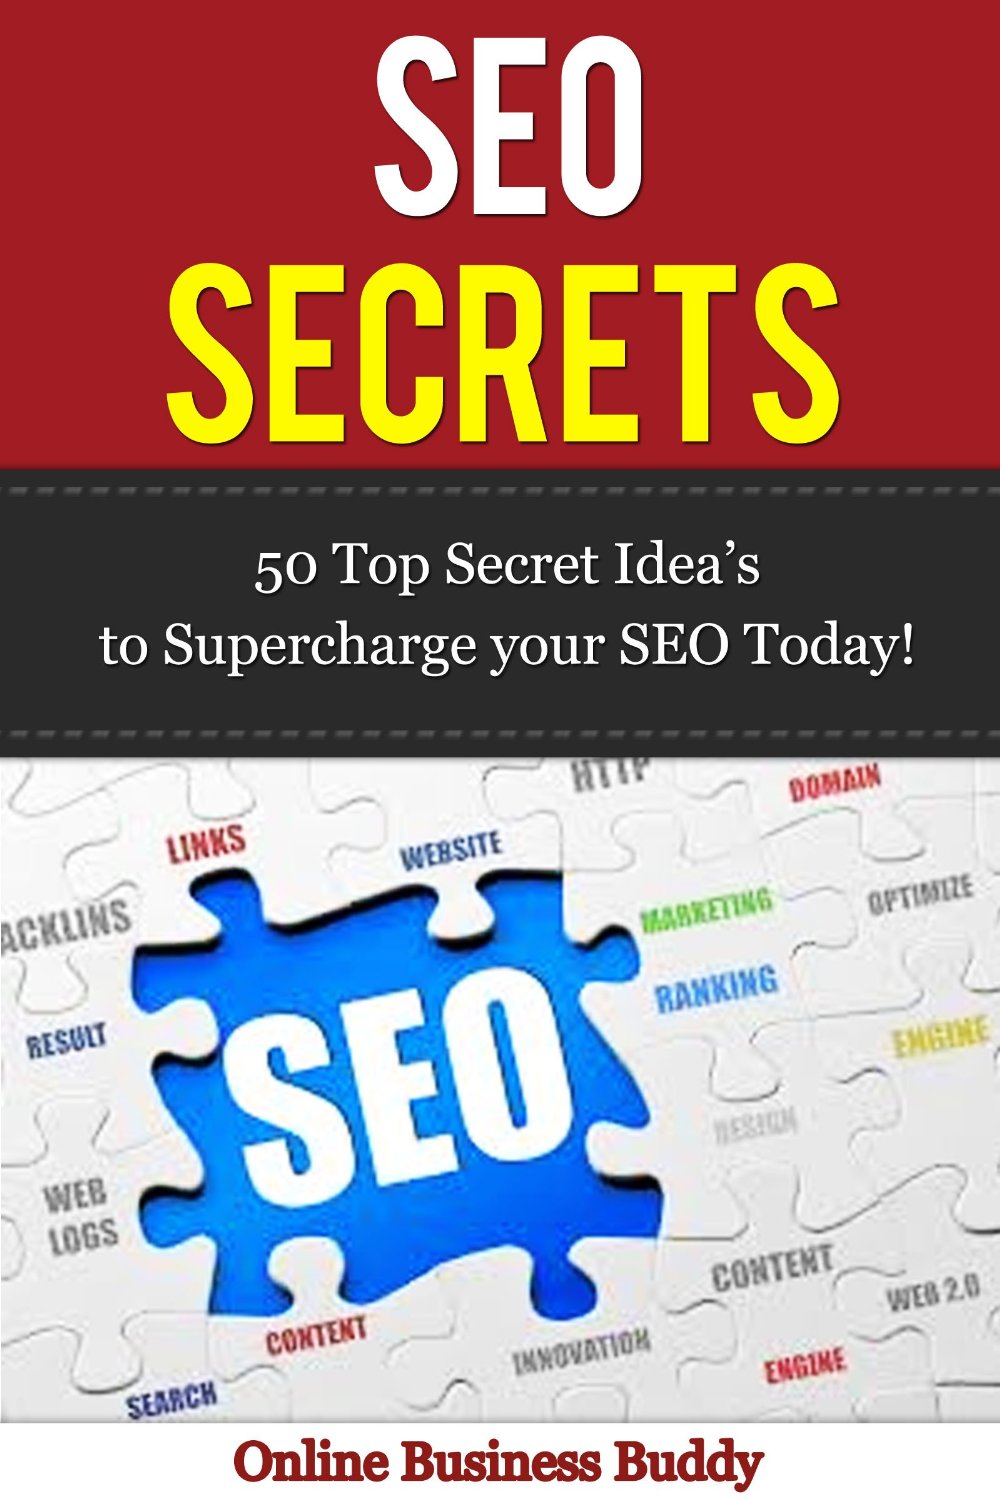 SEO Secrets: 50 Top Secret Idea’s to Supercharge your SEO Today! by Simone Lea